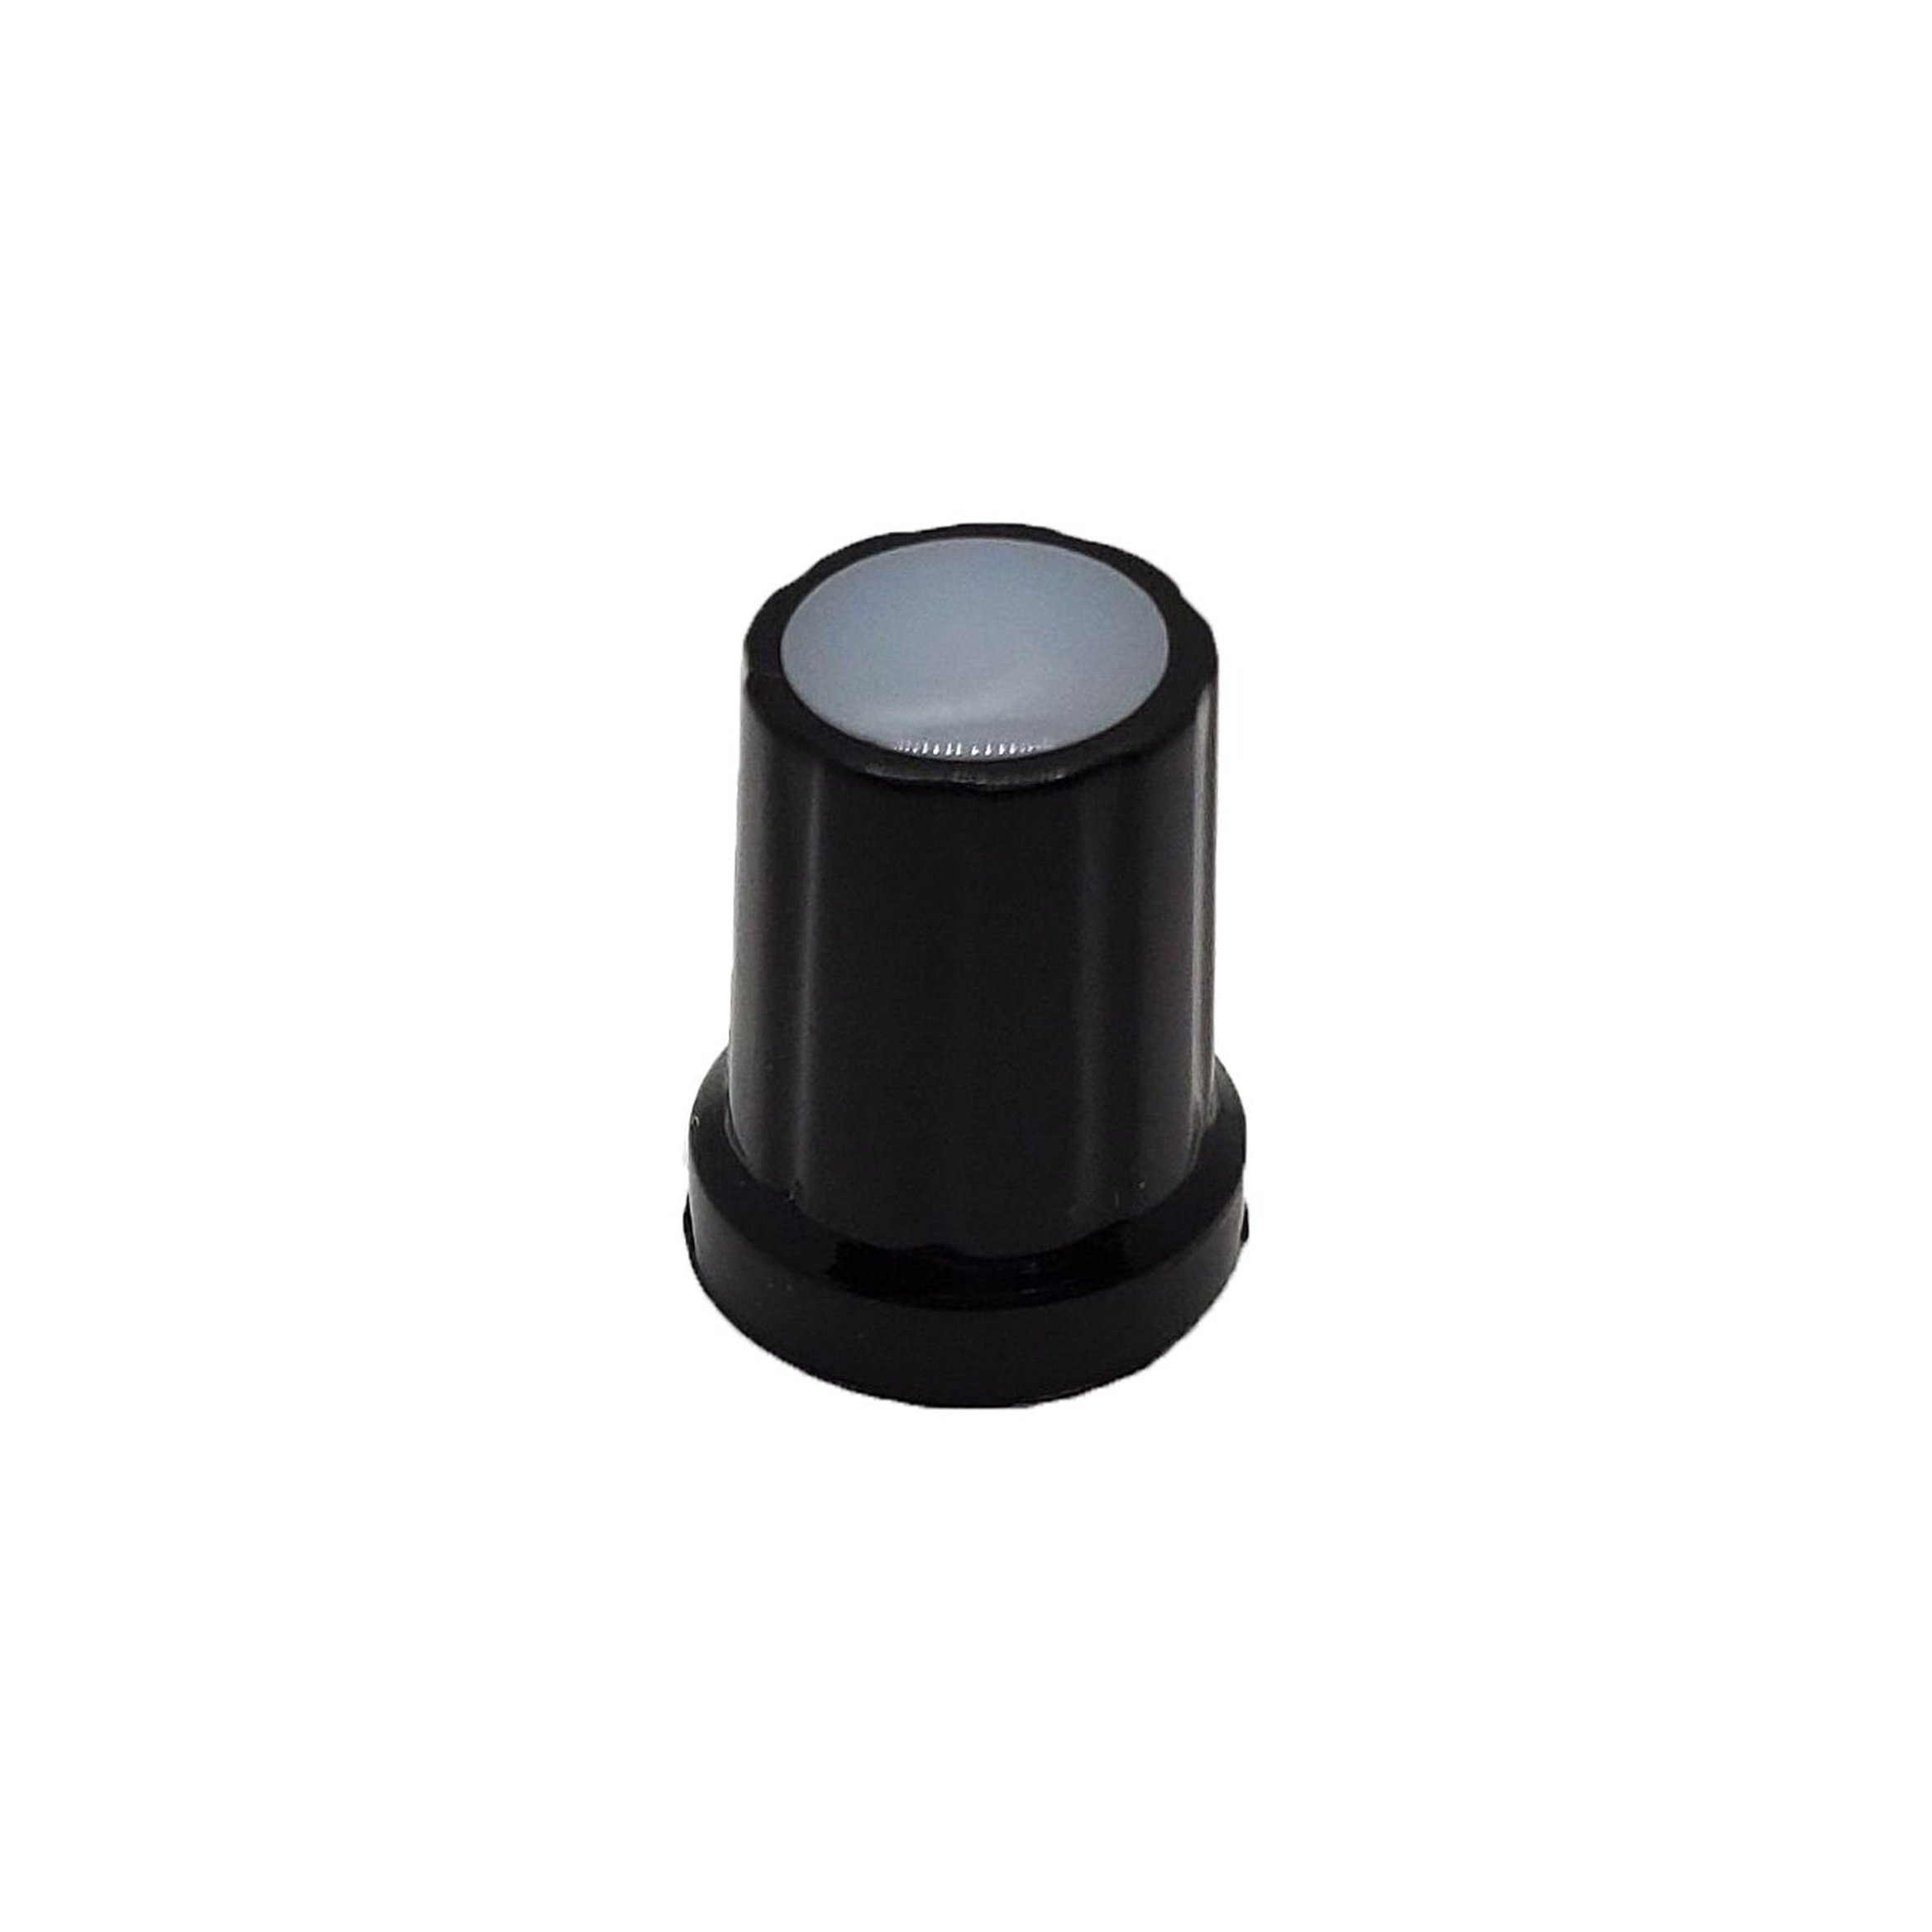 Black small knob